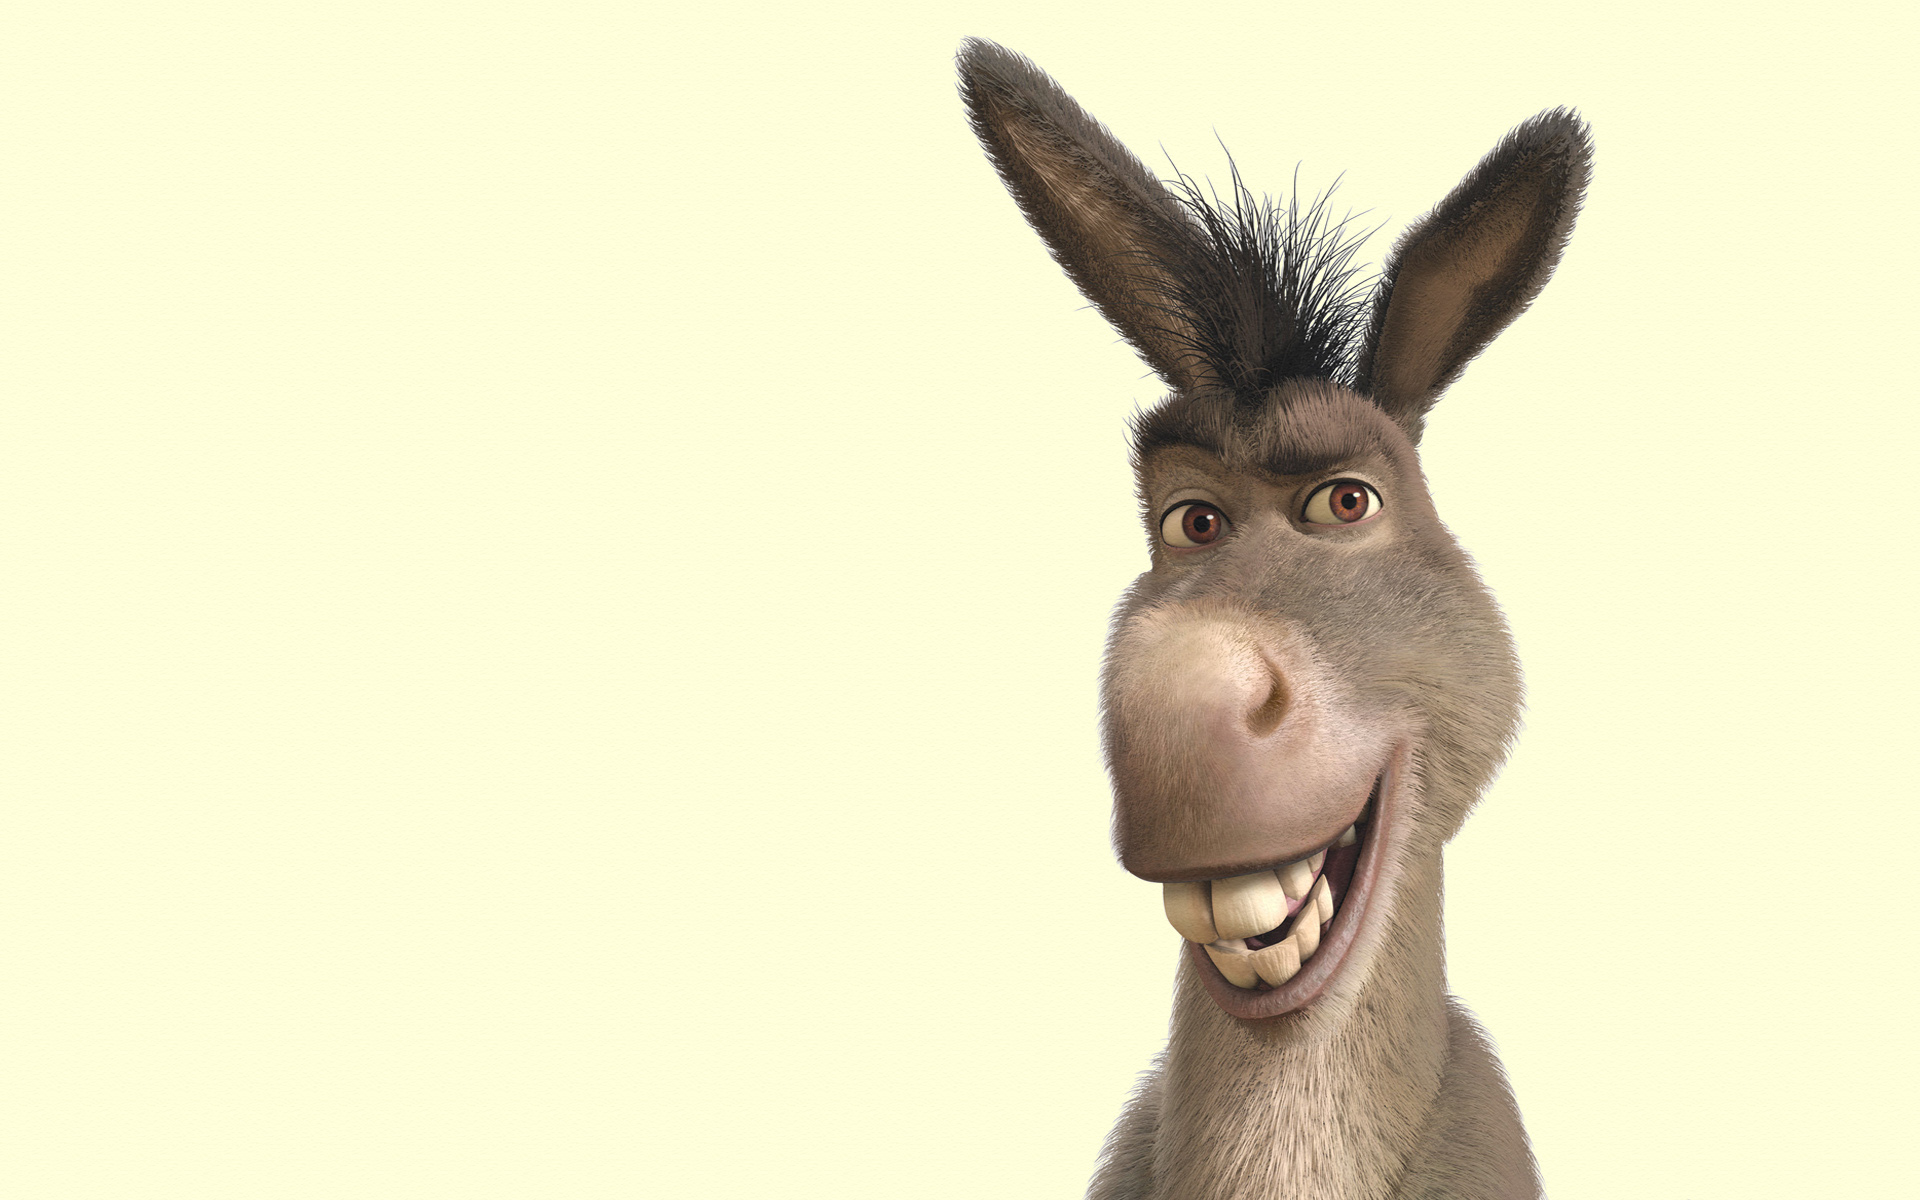 Donkey From Shrek Quotes.